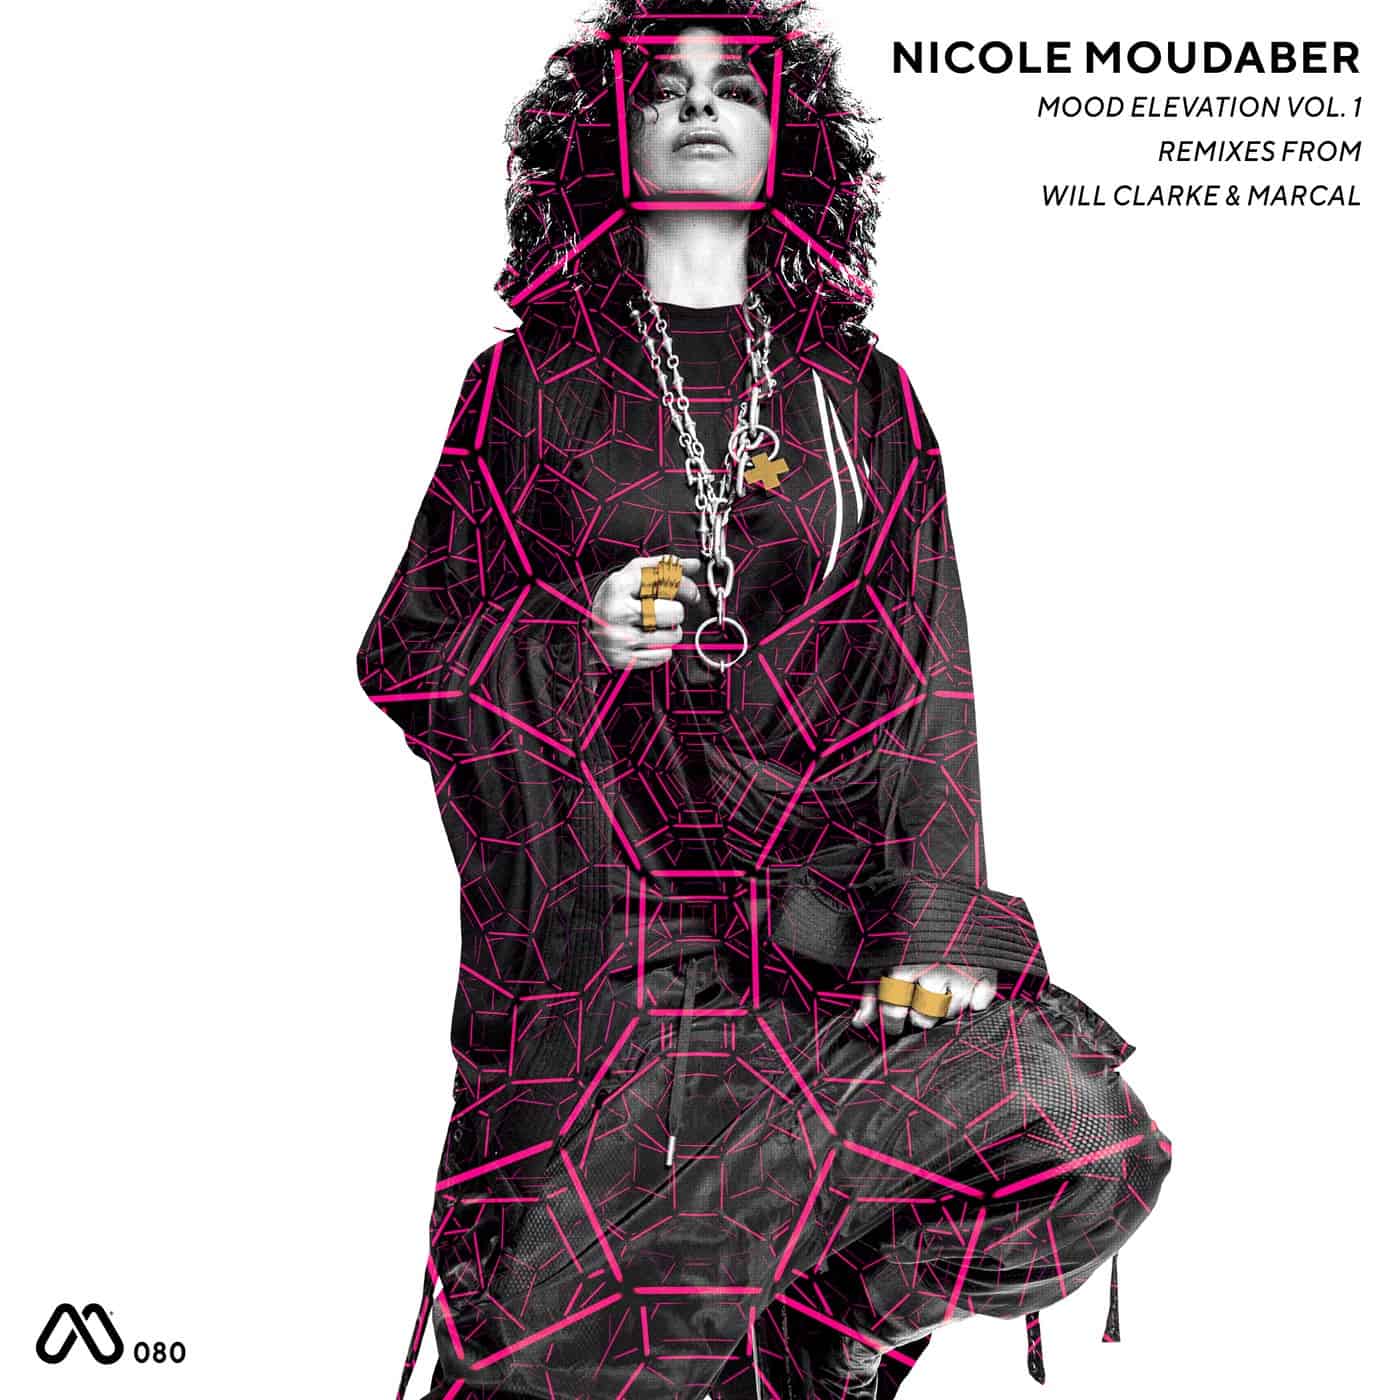 image cover: Alan T, Nicole Moudaber - Mood Elevation Vol. 1 / MOOD080